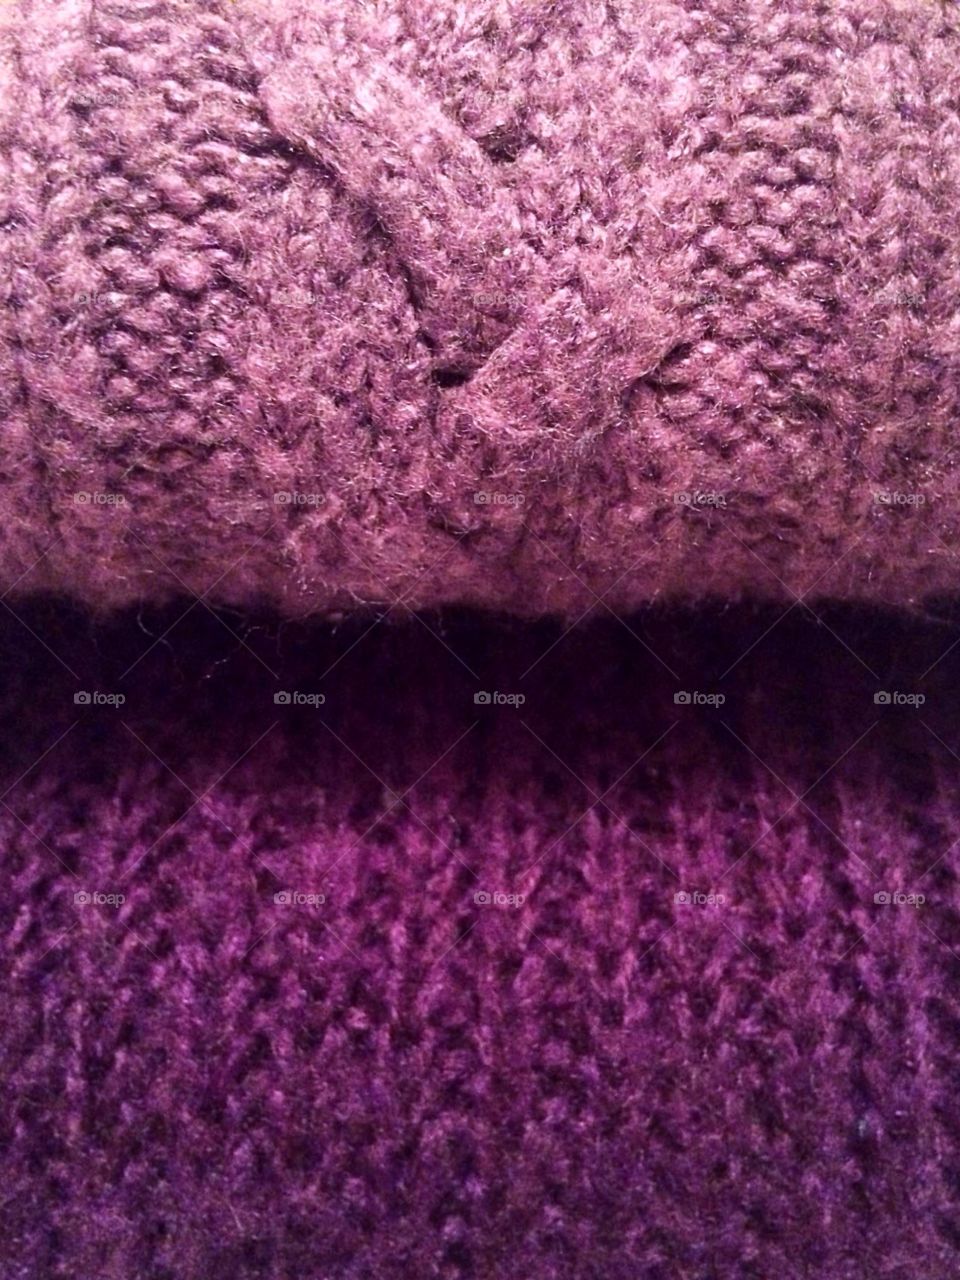 Purple wool knitted sweaters